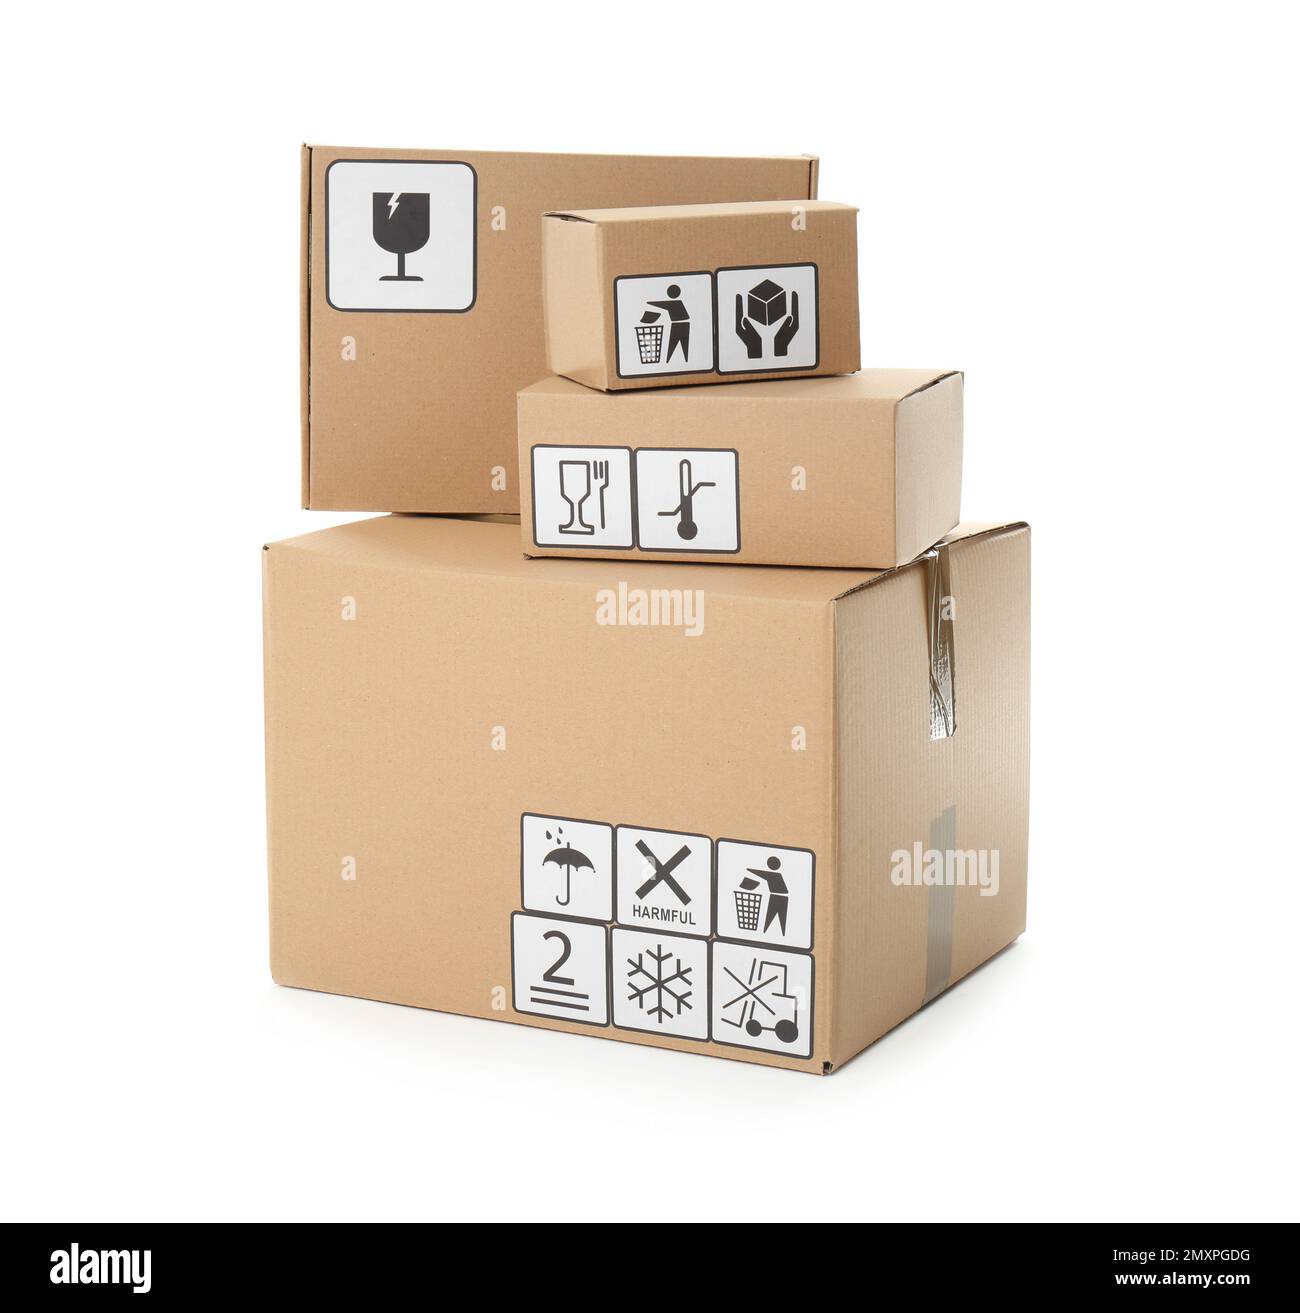 https://c8.alamy.com/compes/2mxpgdg/cajas-de-carton-con-diferentes-simbolos-de-embalaje-sobre-fondo-blanco-entrega-de-paquetes-2mxpgdg.jpg